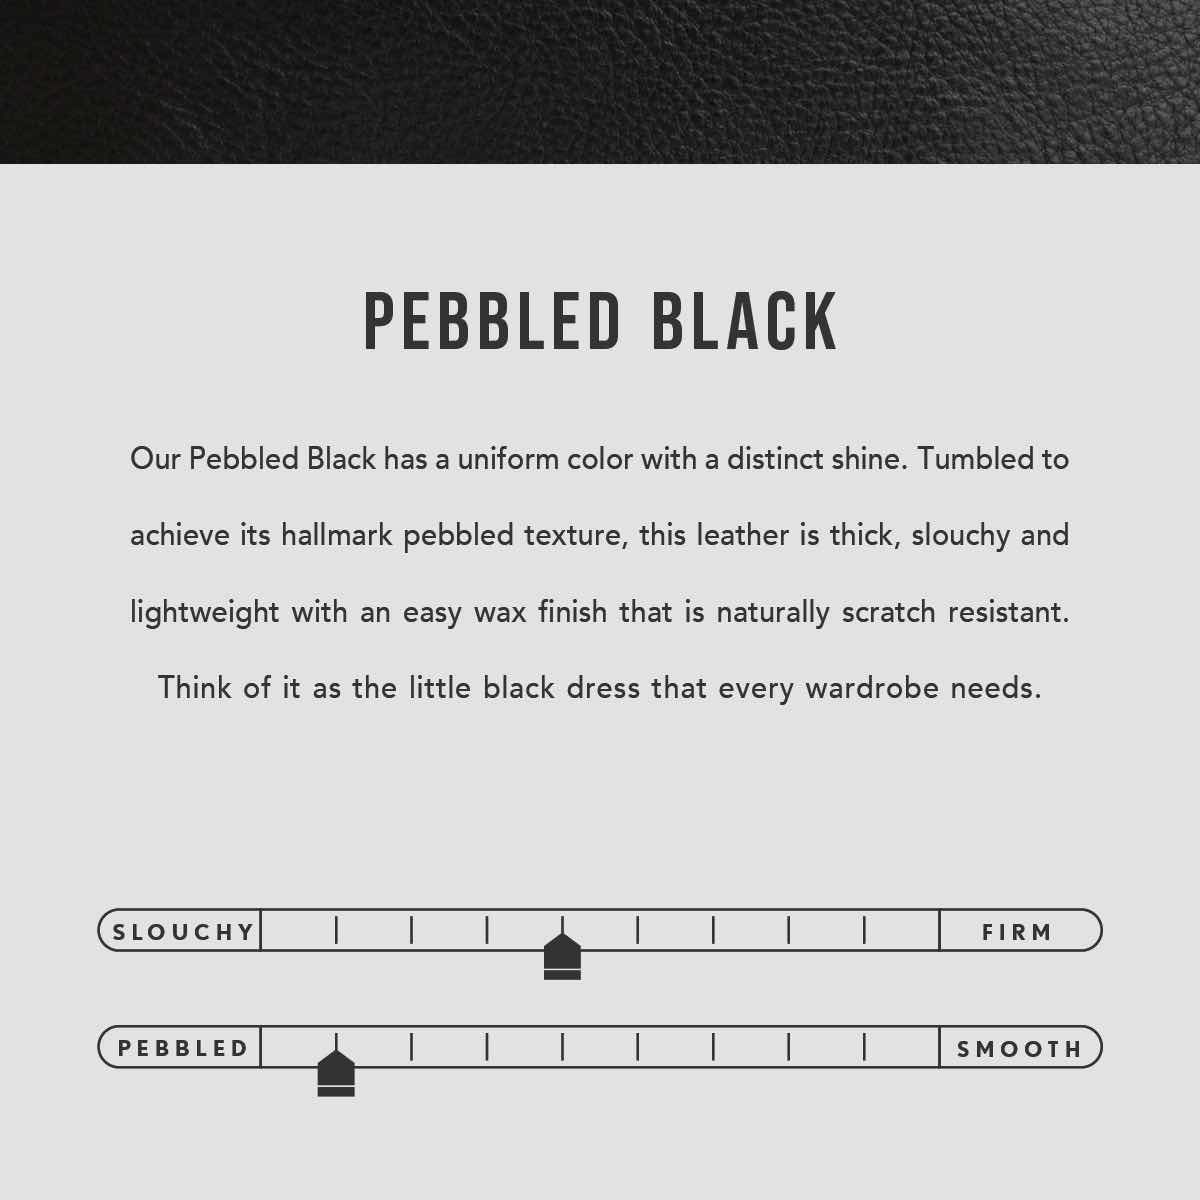 Pebbled--black | infographic